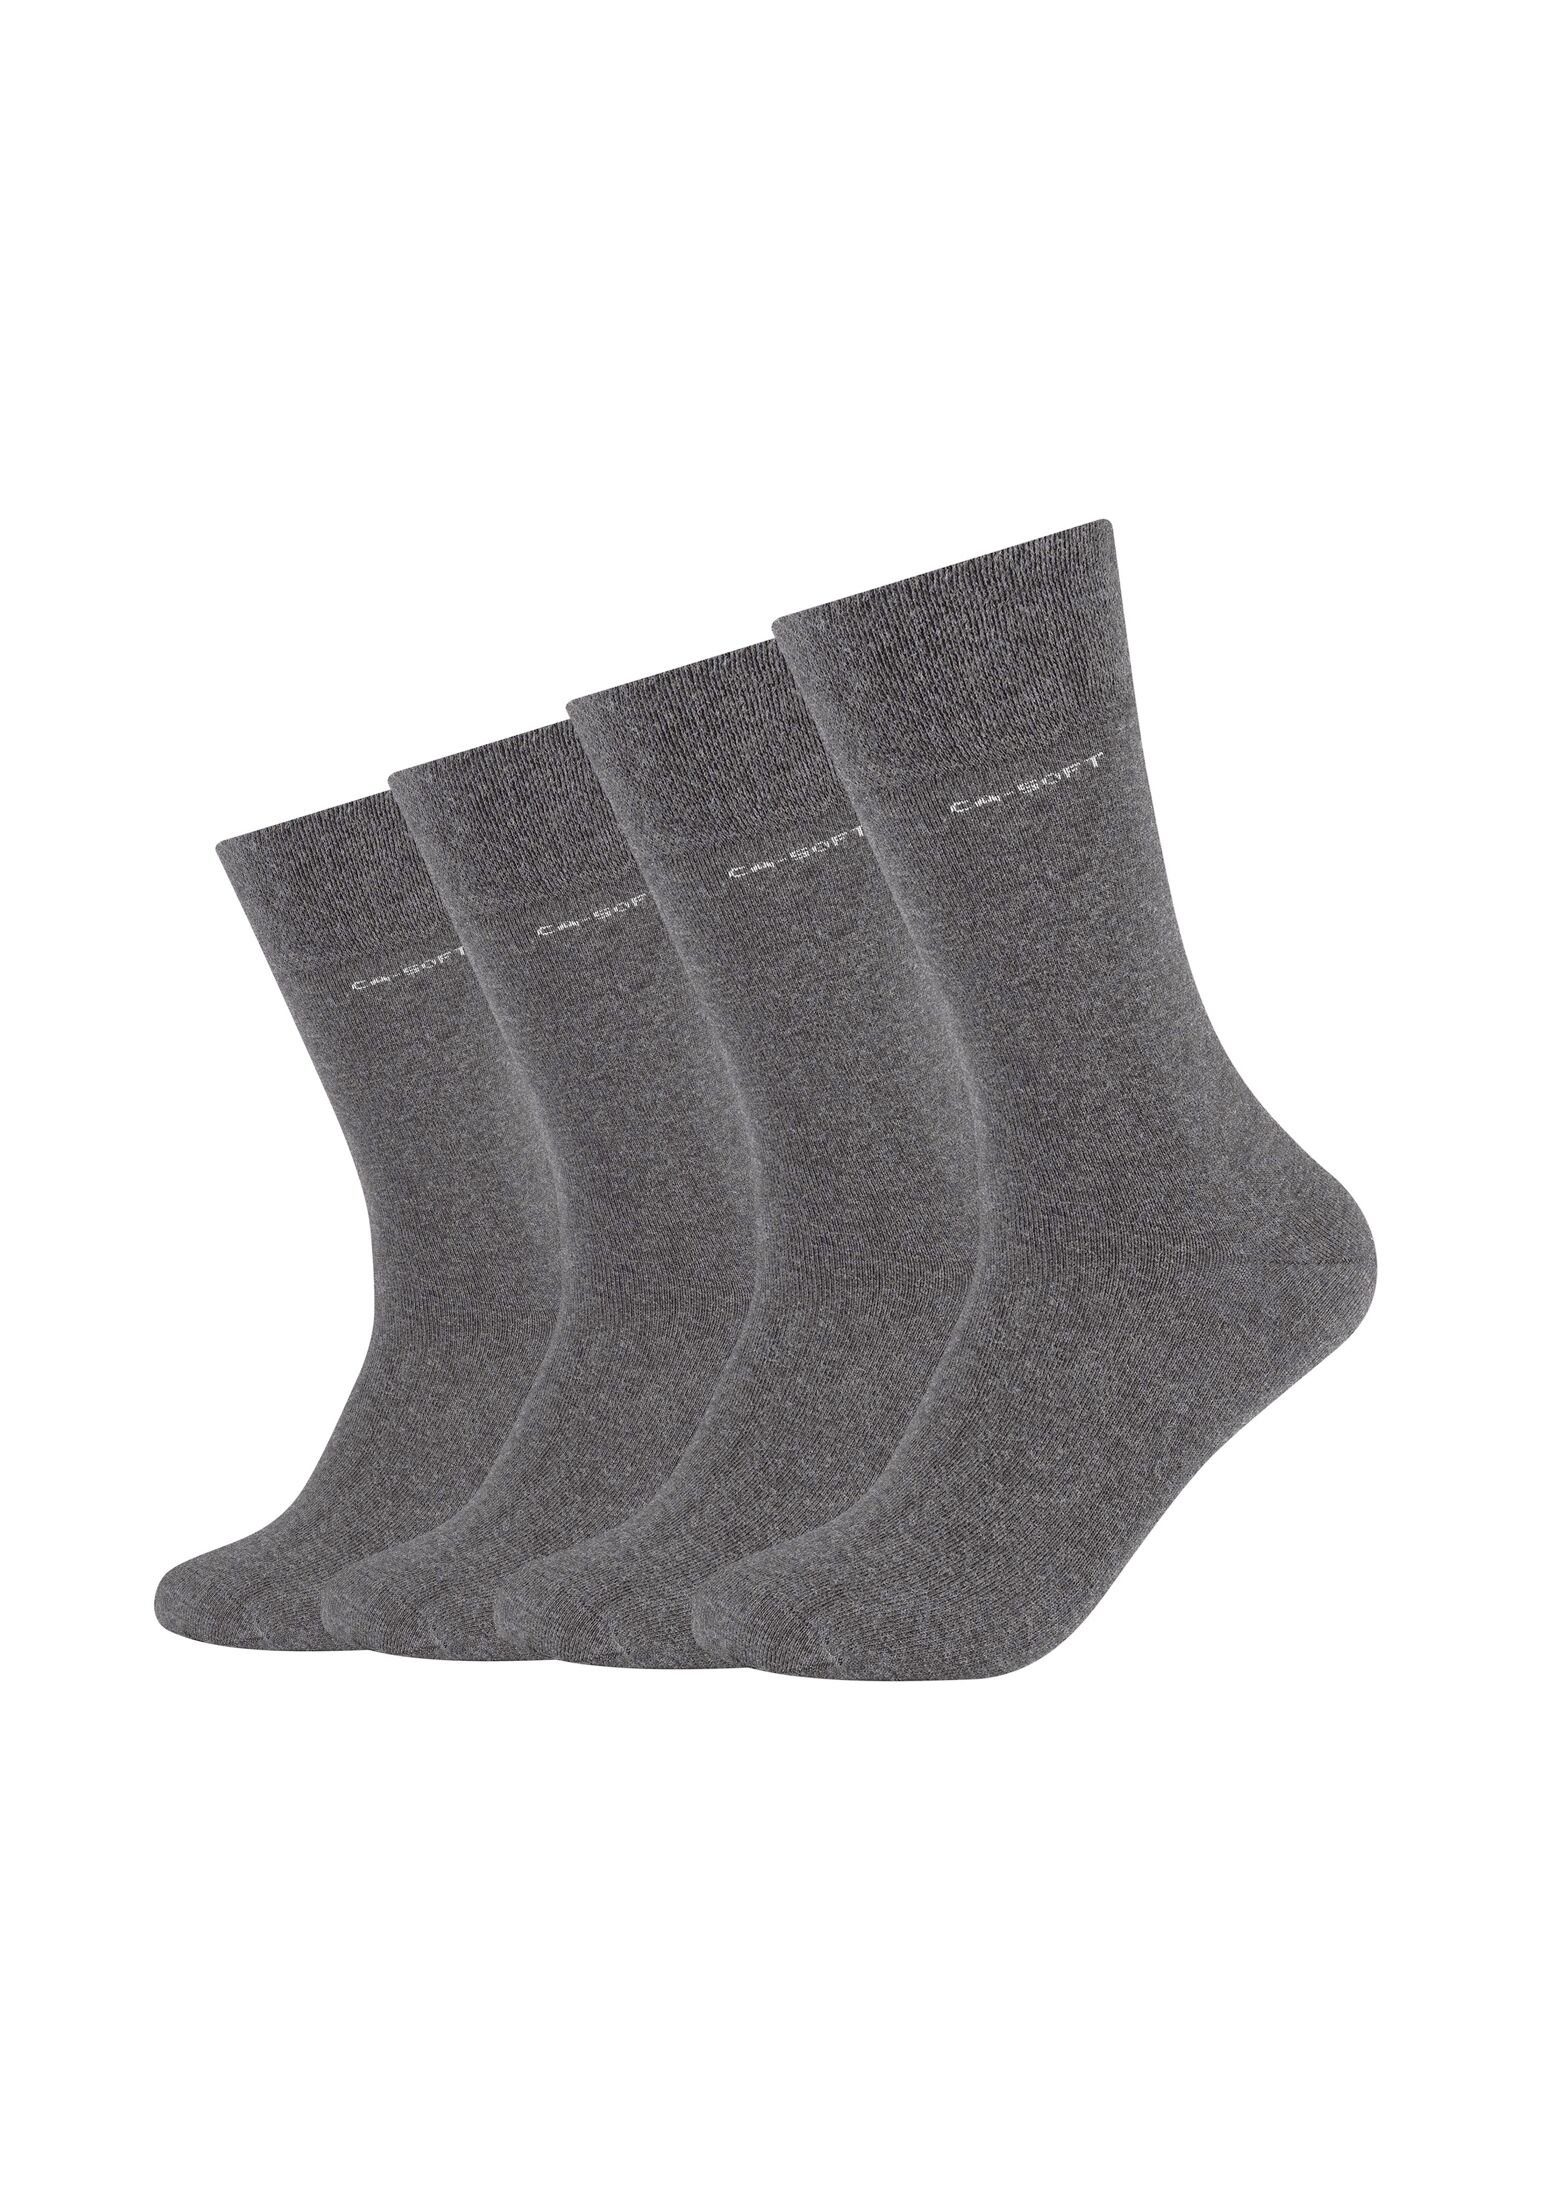 Camano Socken Socken 4er Pack dark melange grey